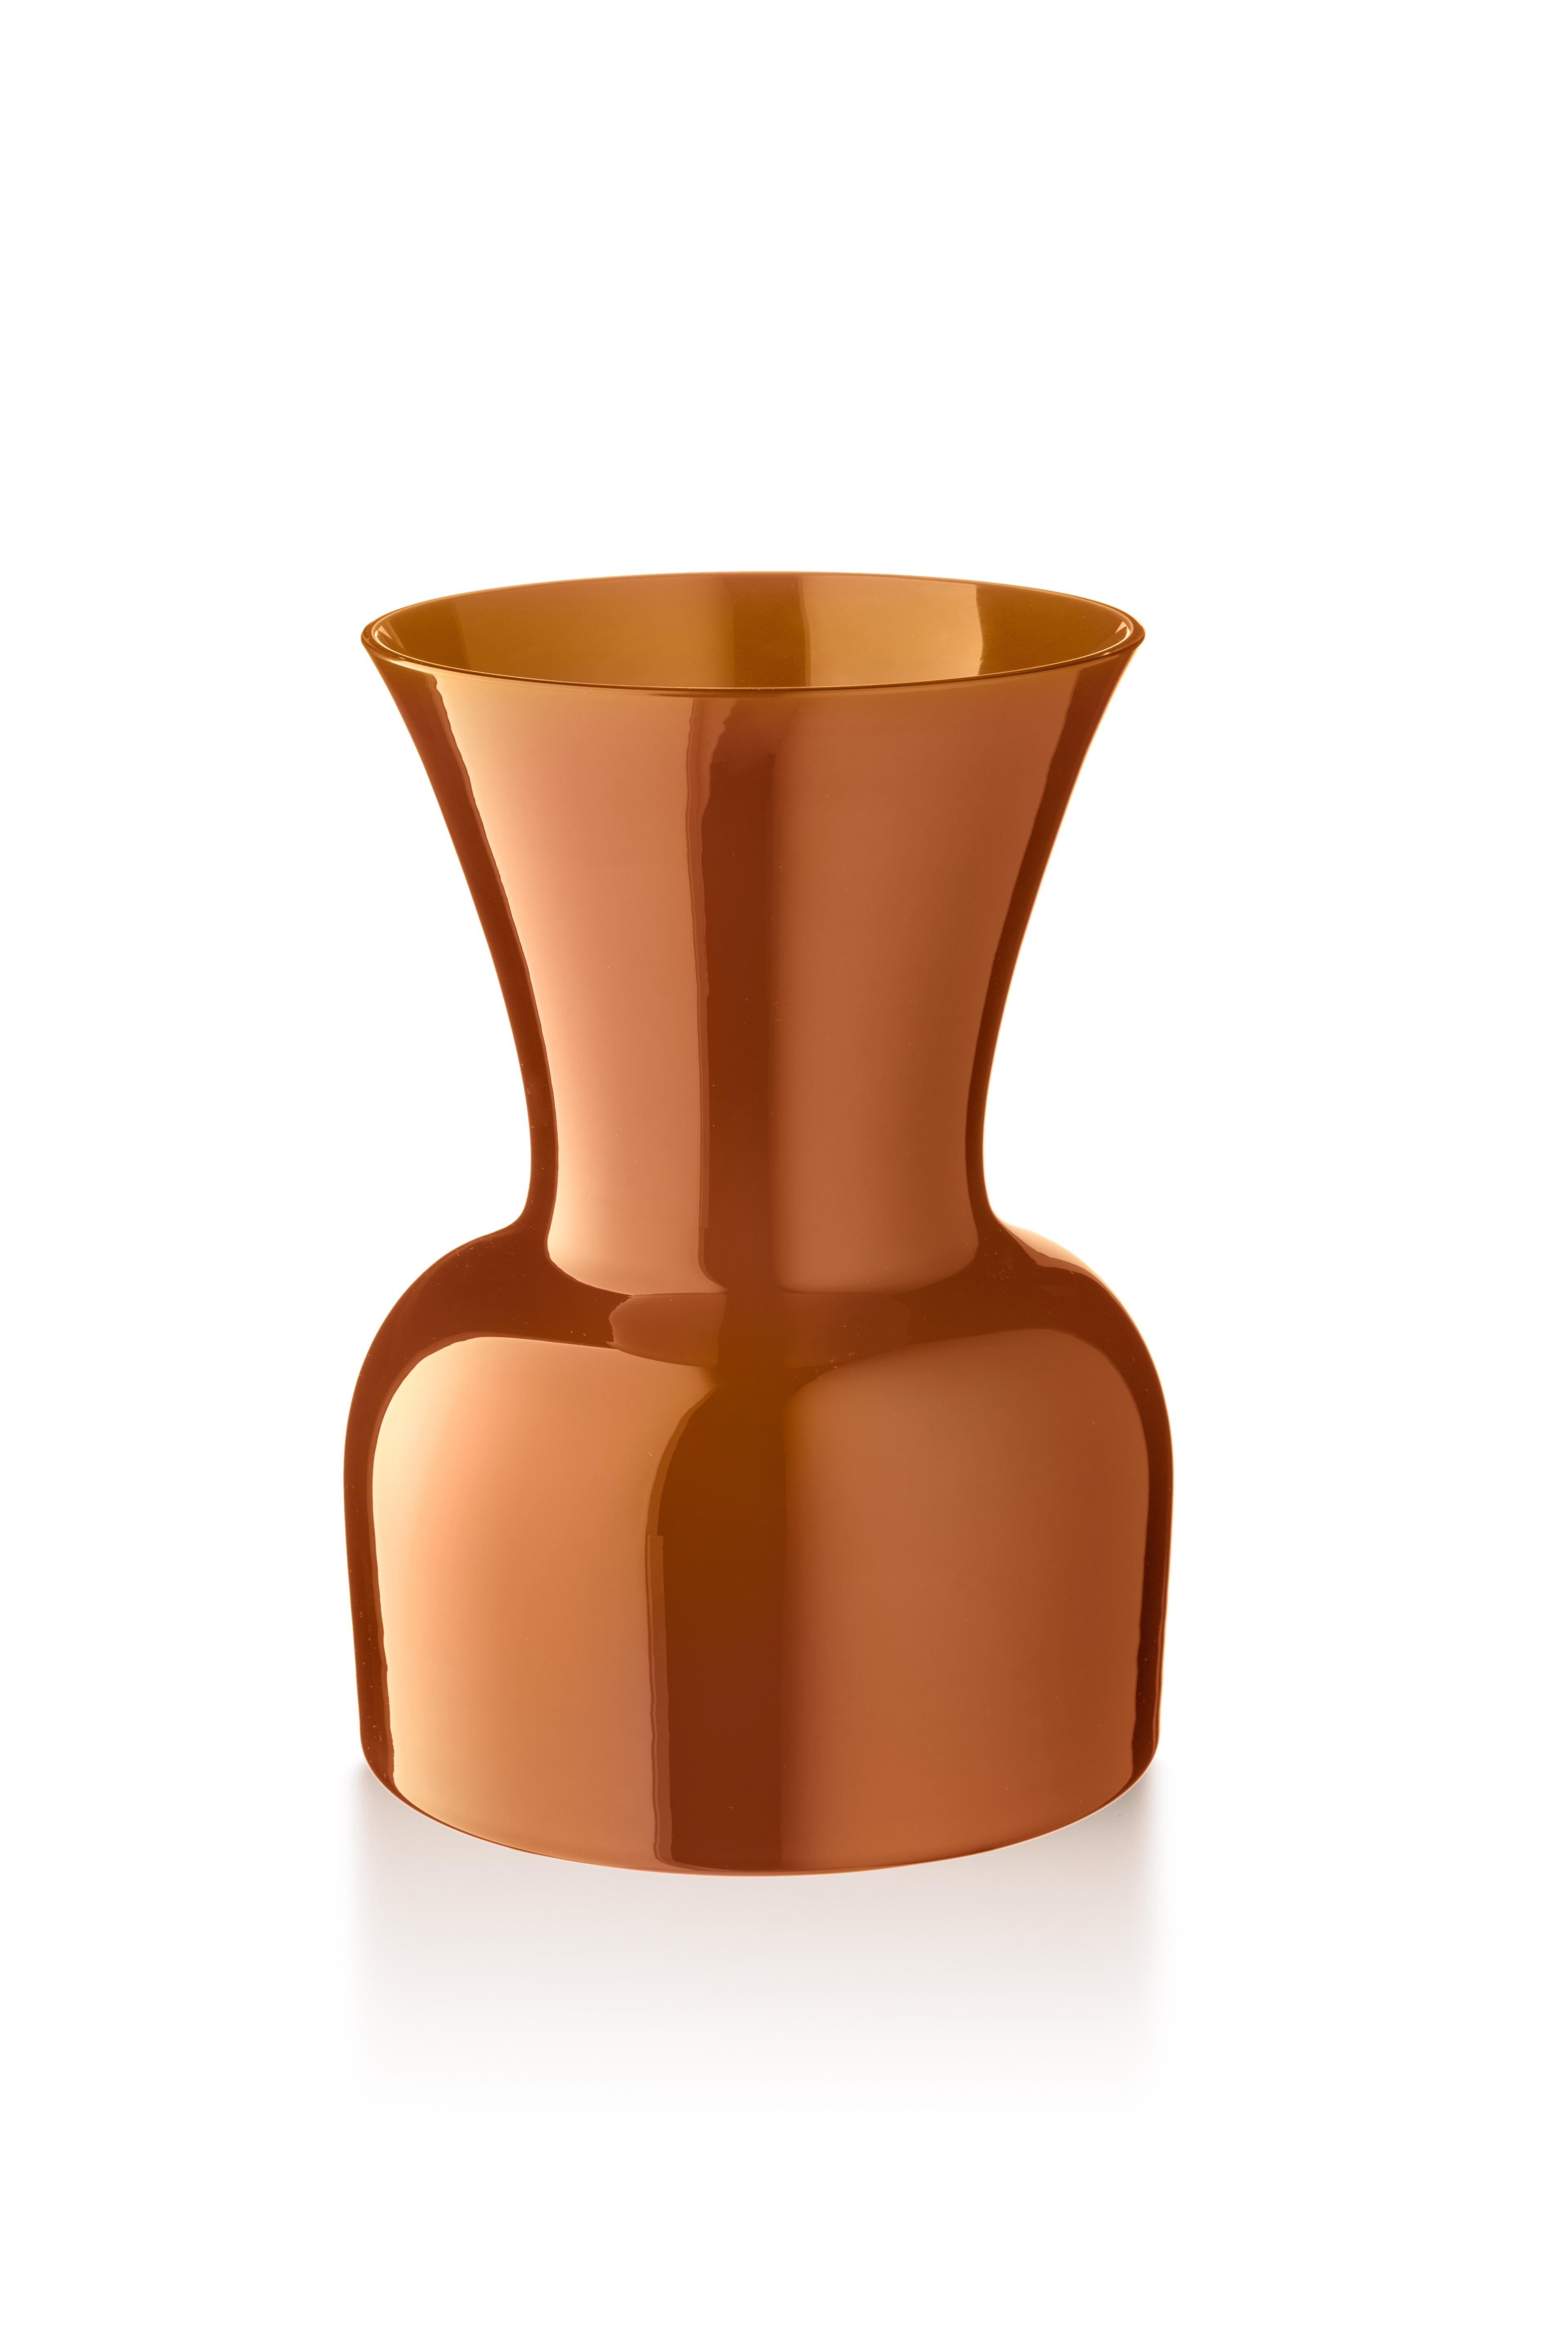 Brown (10066) Large Profili Daisy Murano Glass Vase by Anna Gili